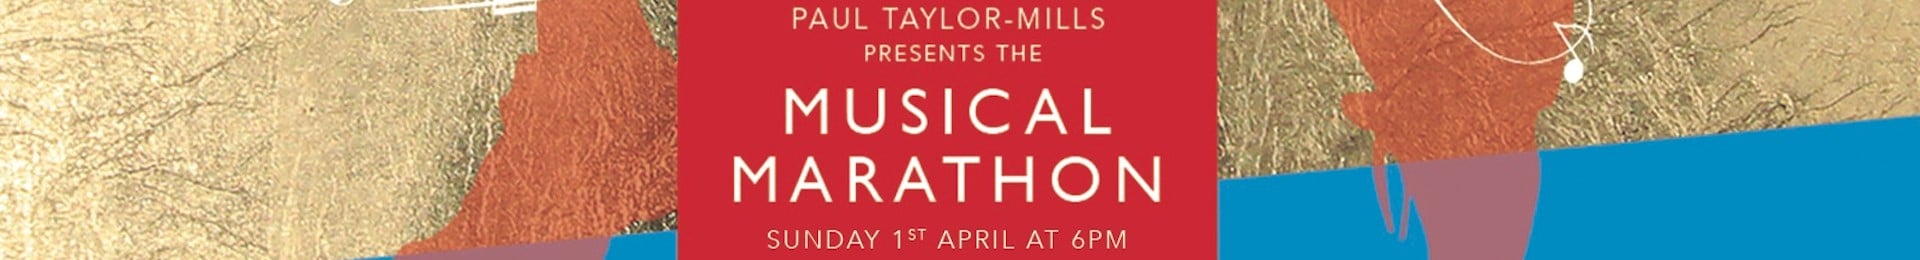 Musical Marathon banner image